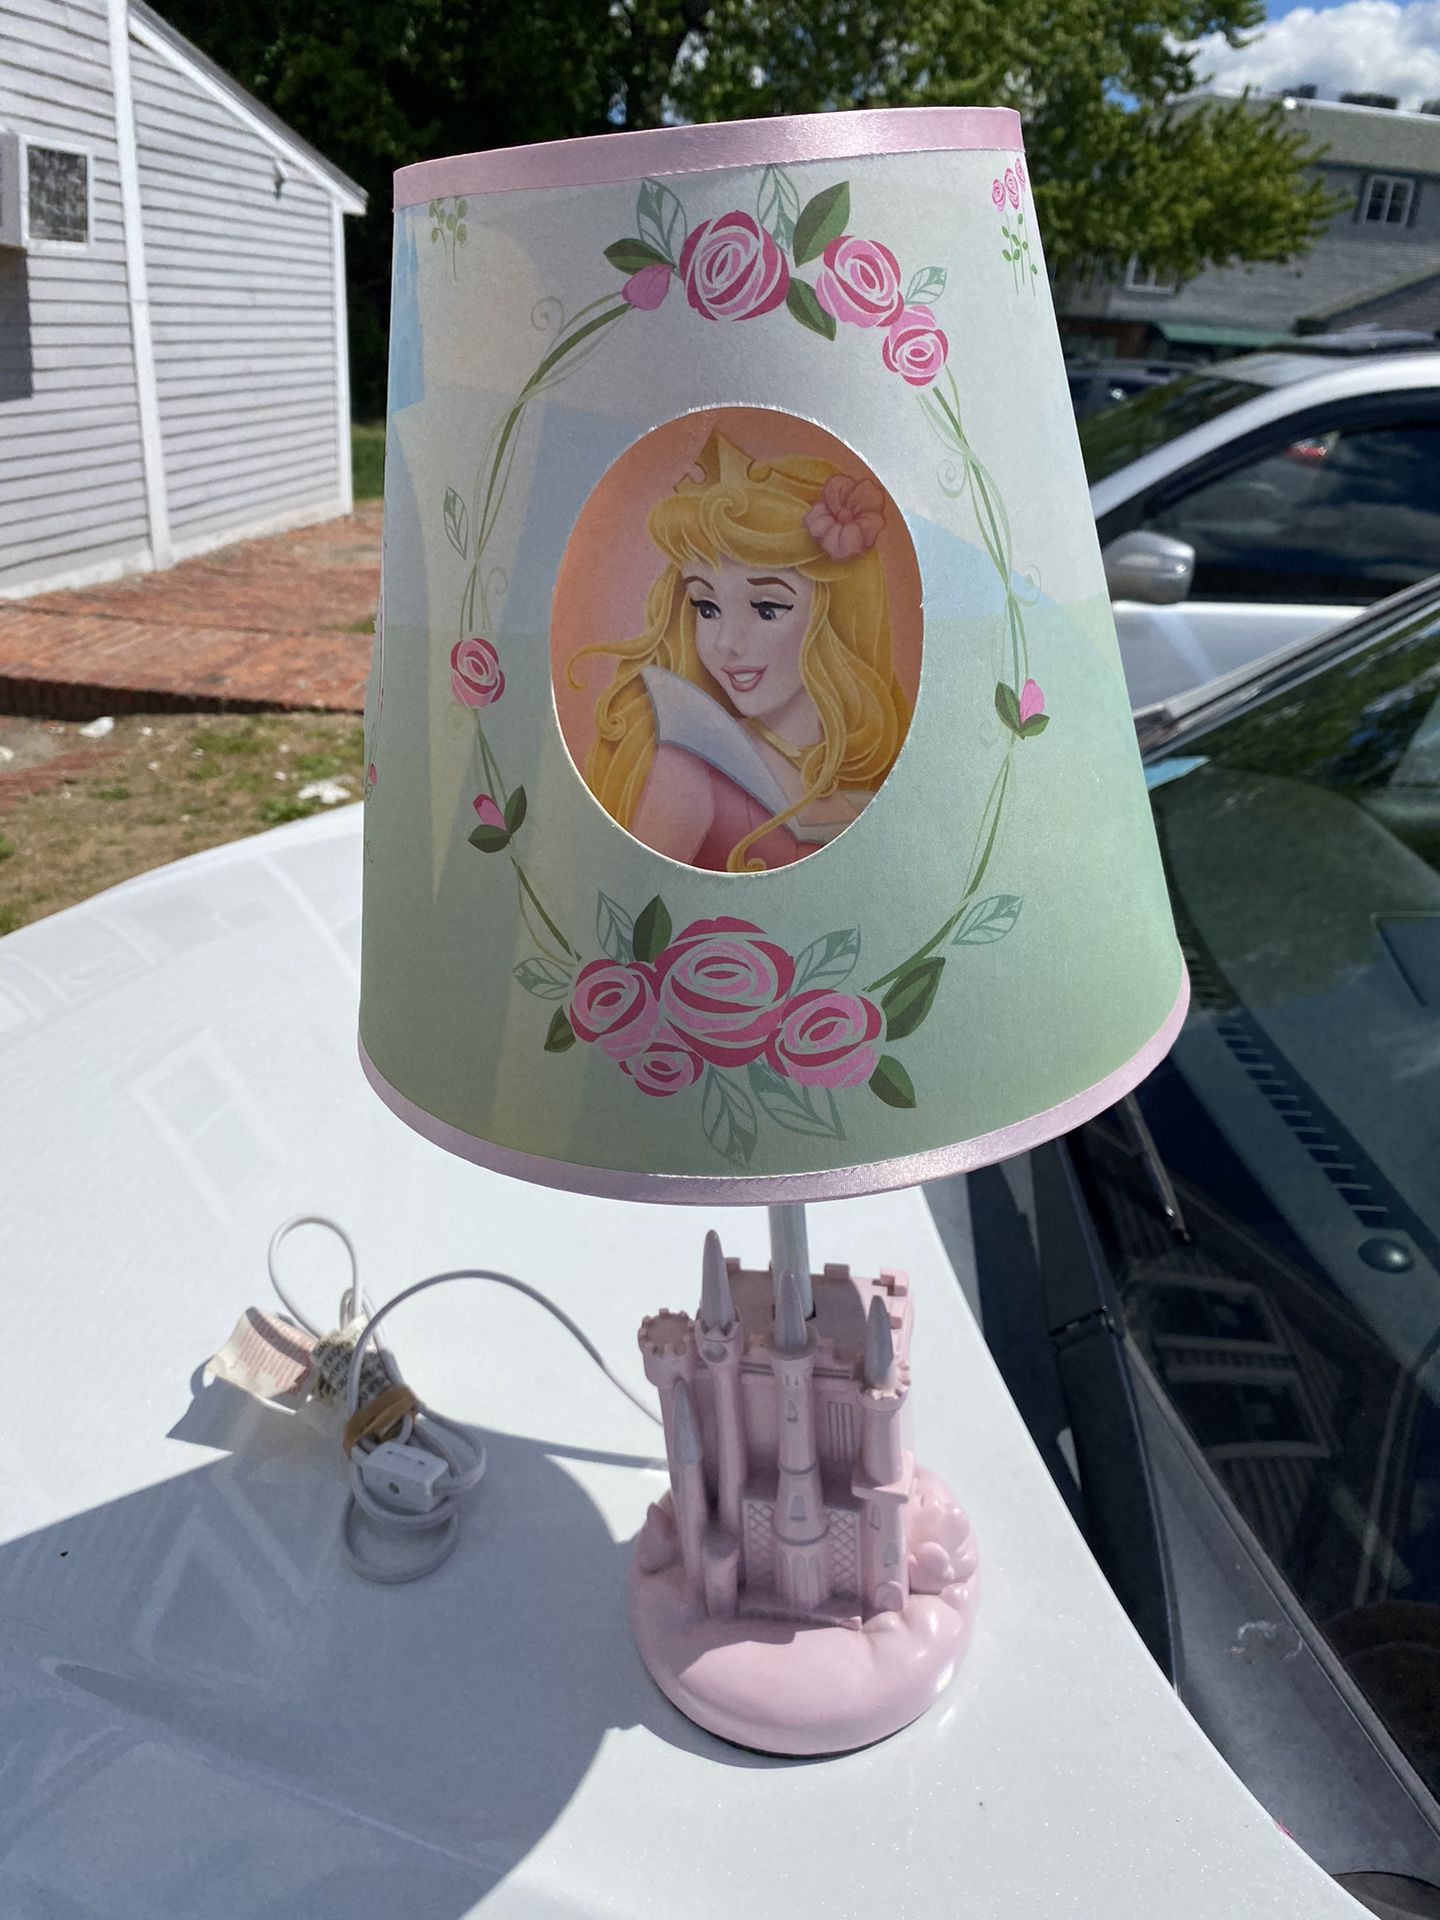 Disney Princess Lamp 